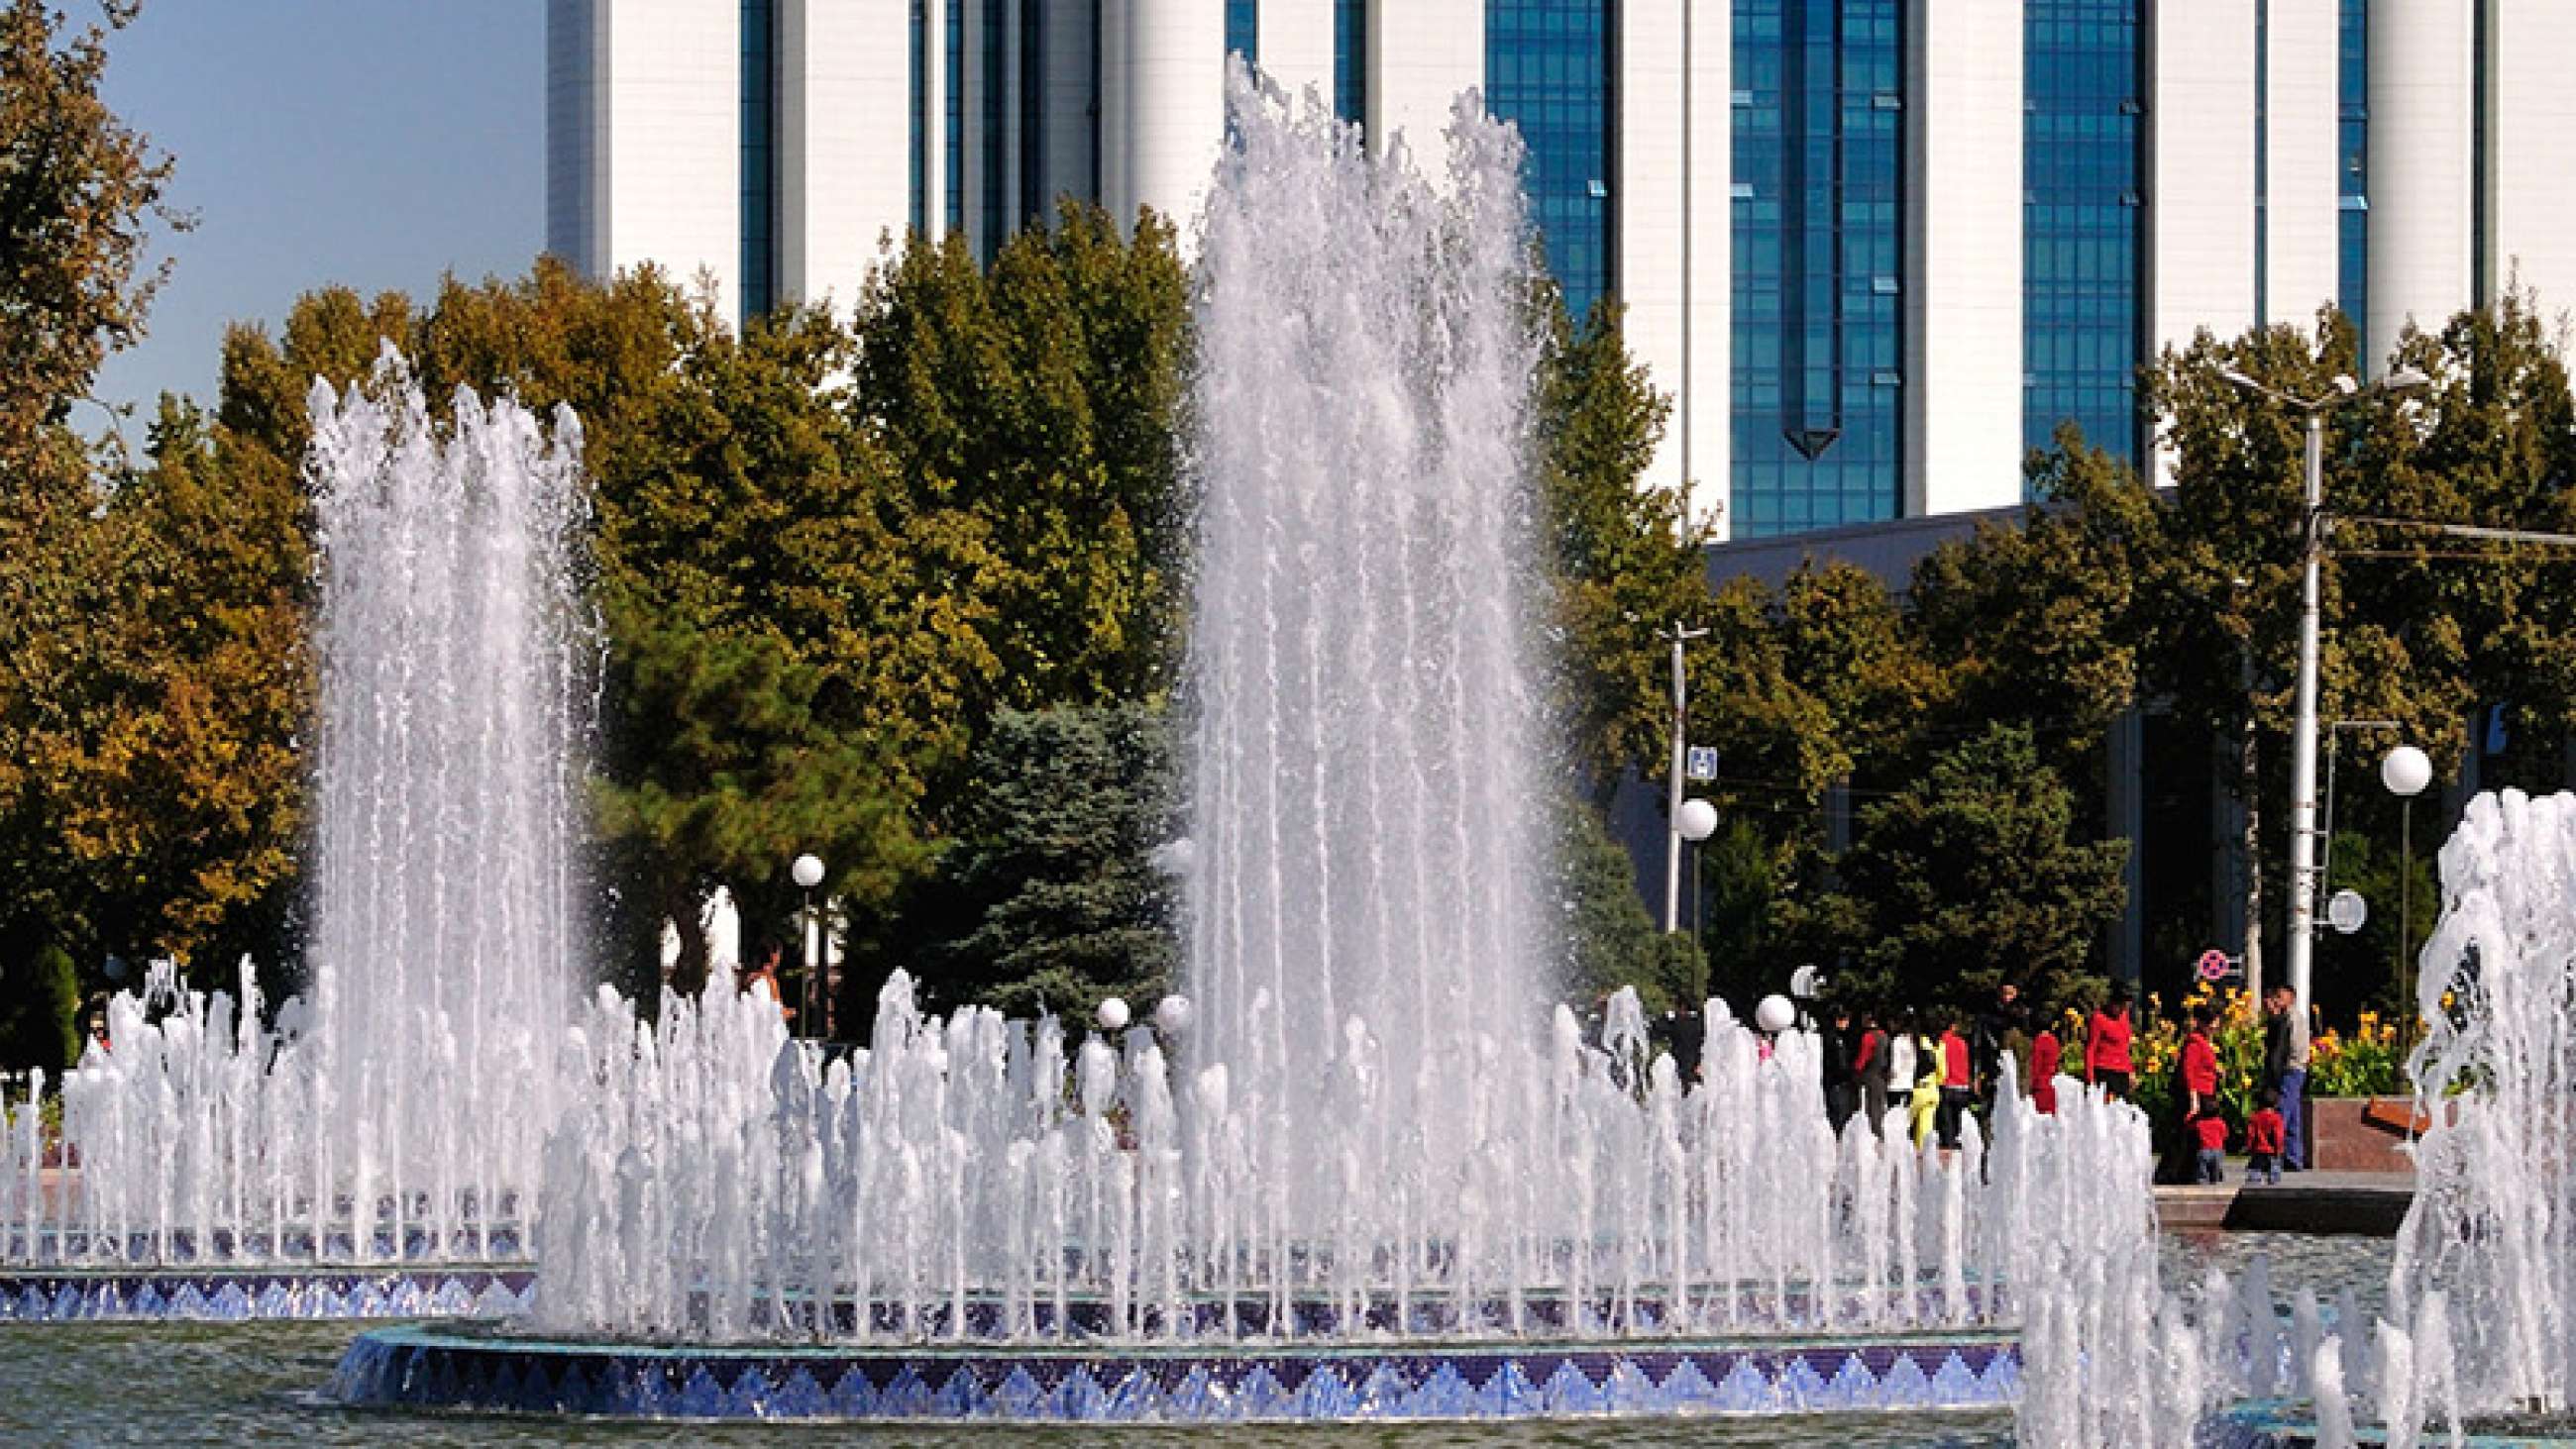 Tashkent Independence Square fountains